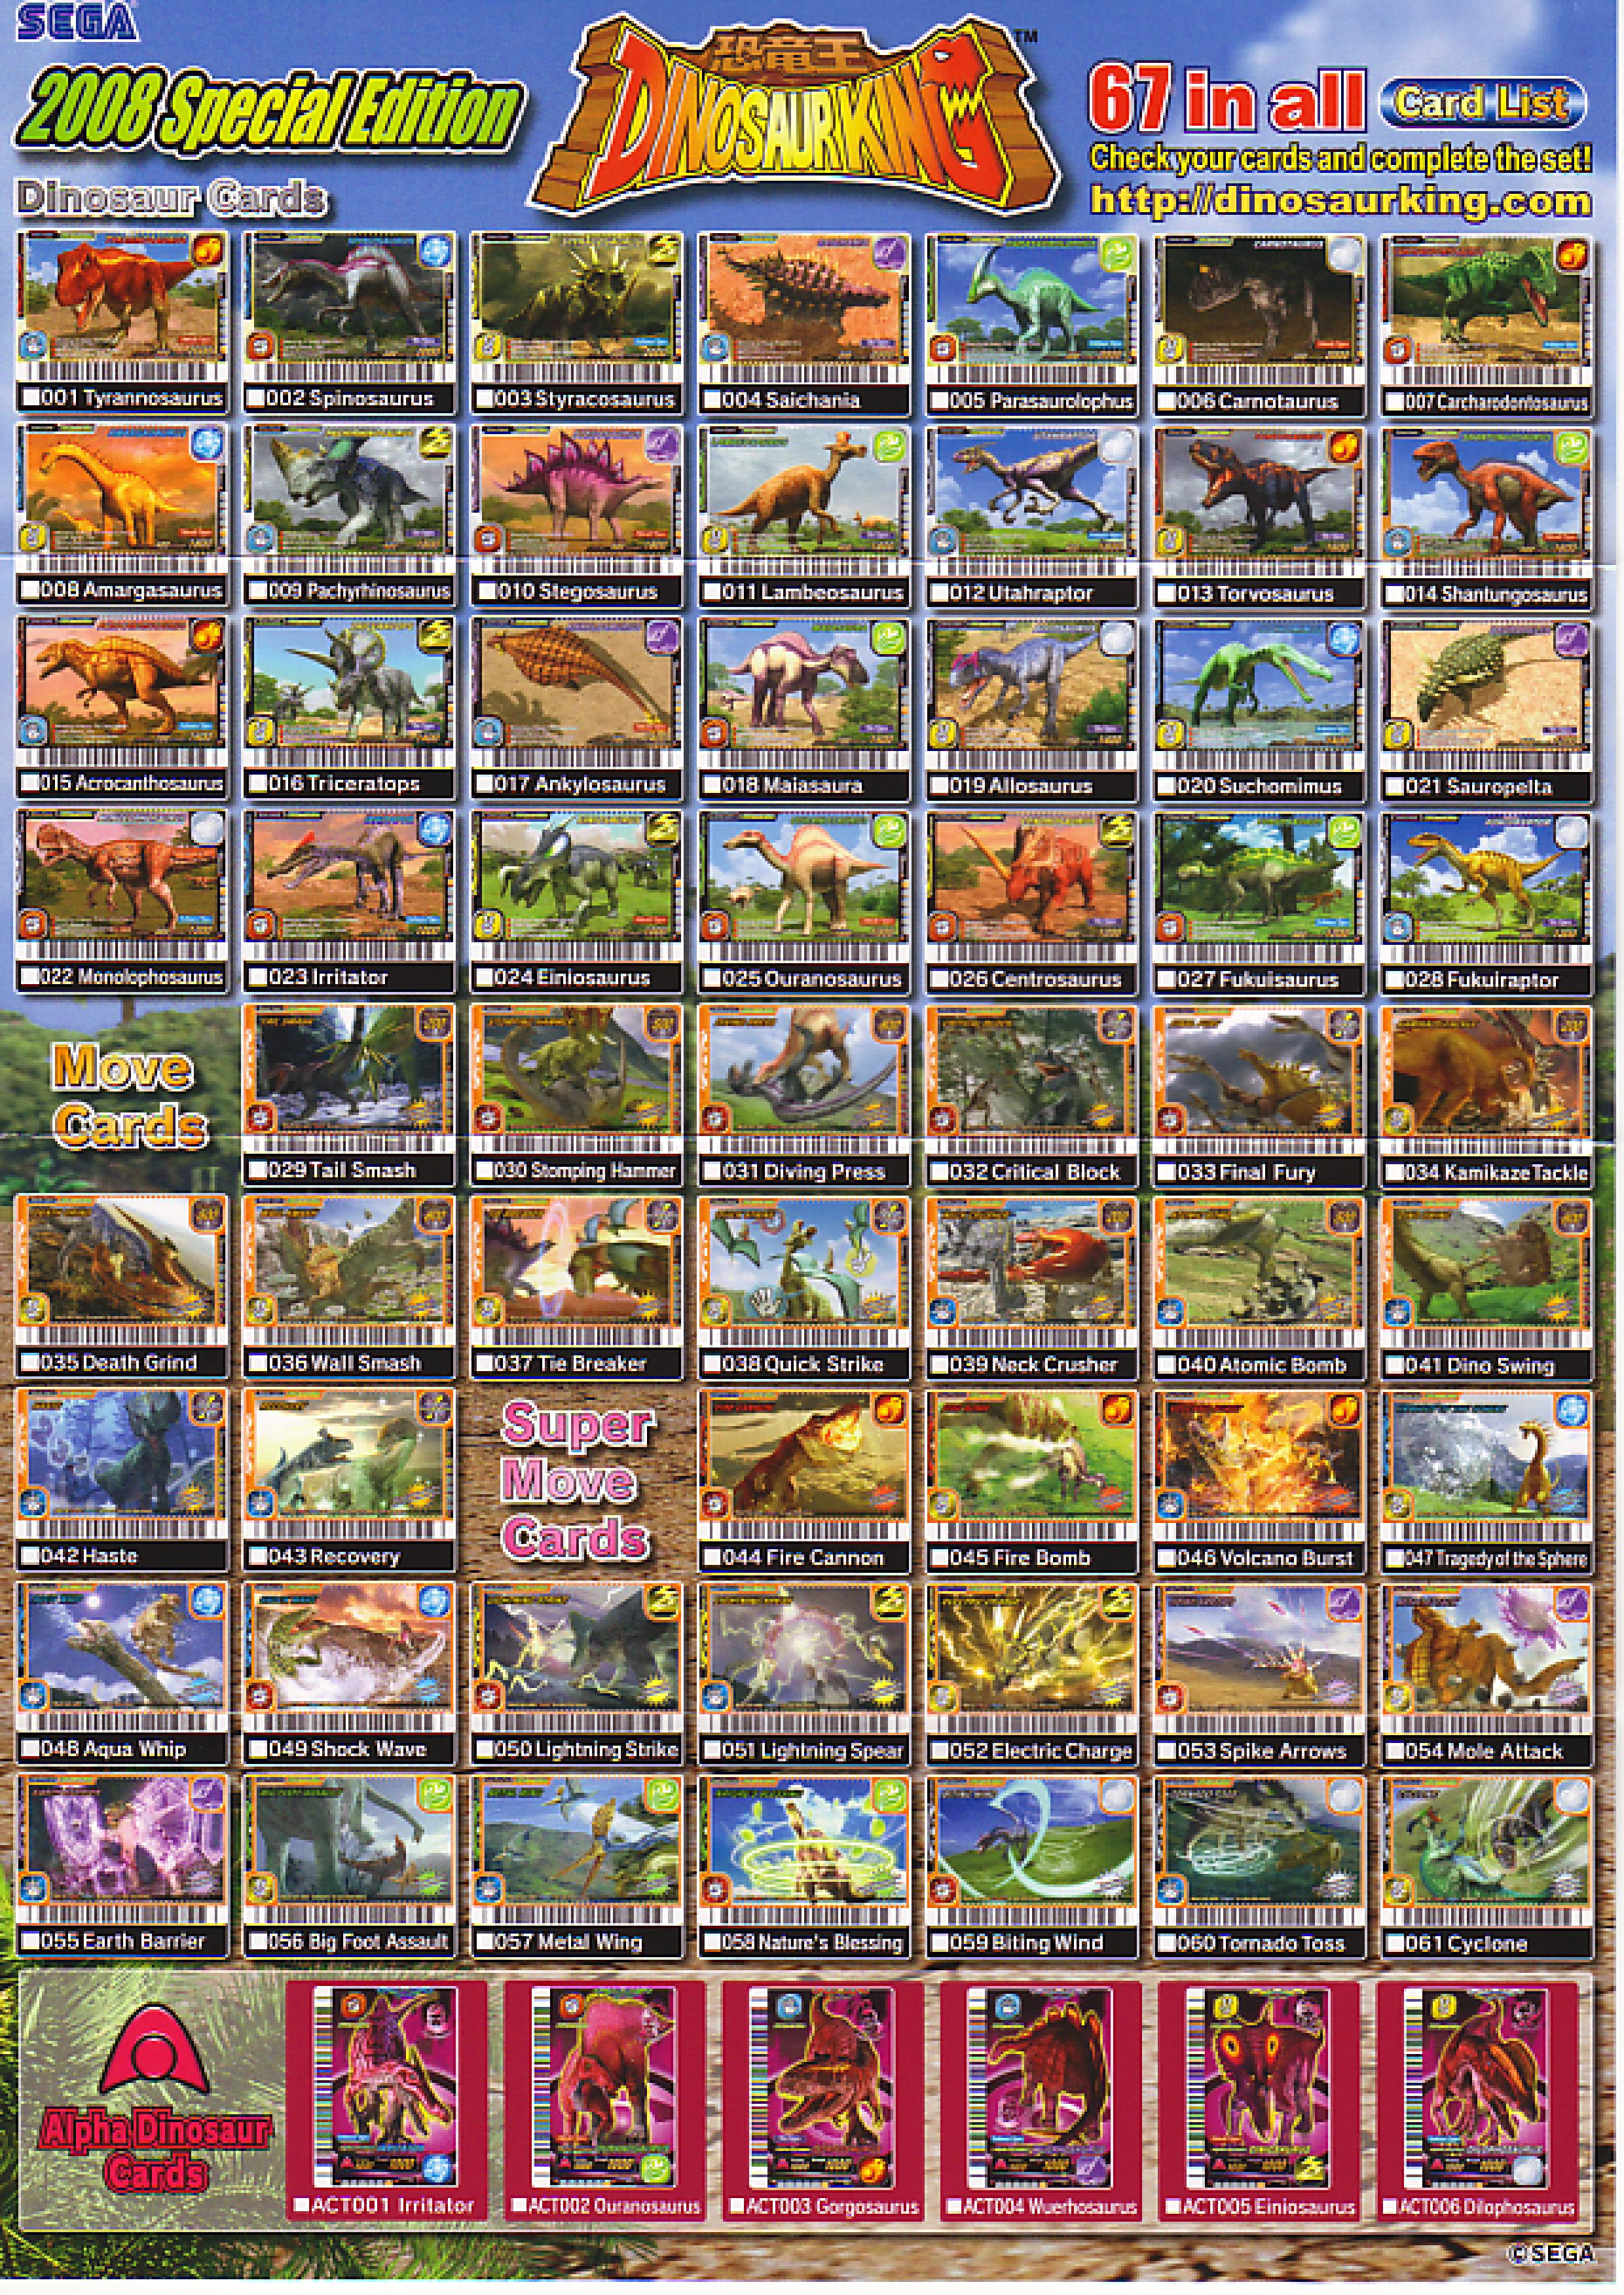 Dinosaur king 2008 special edition cards